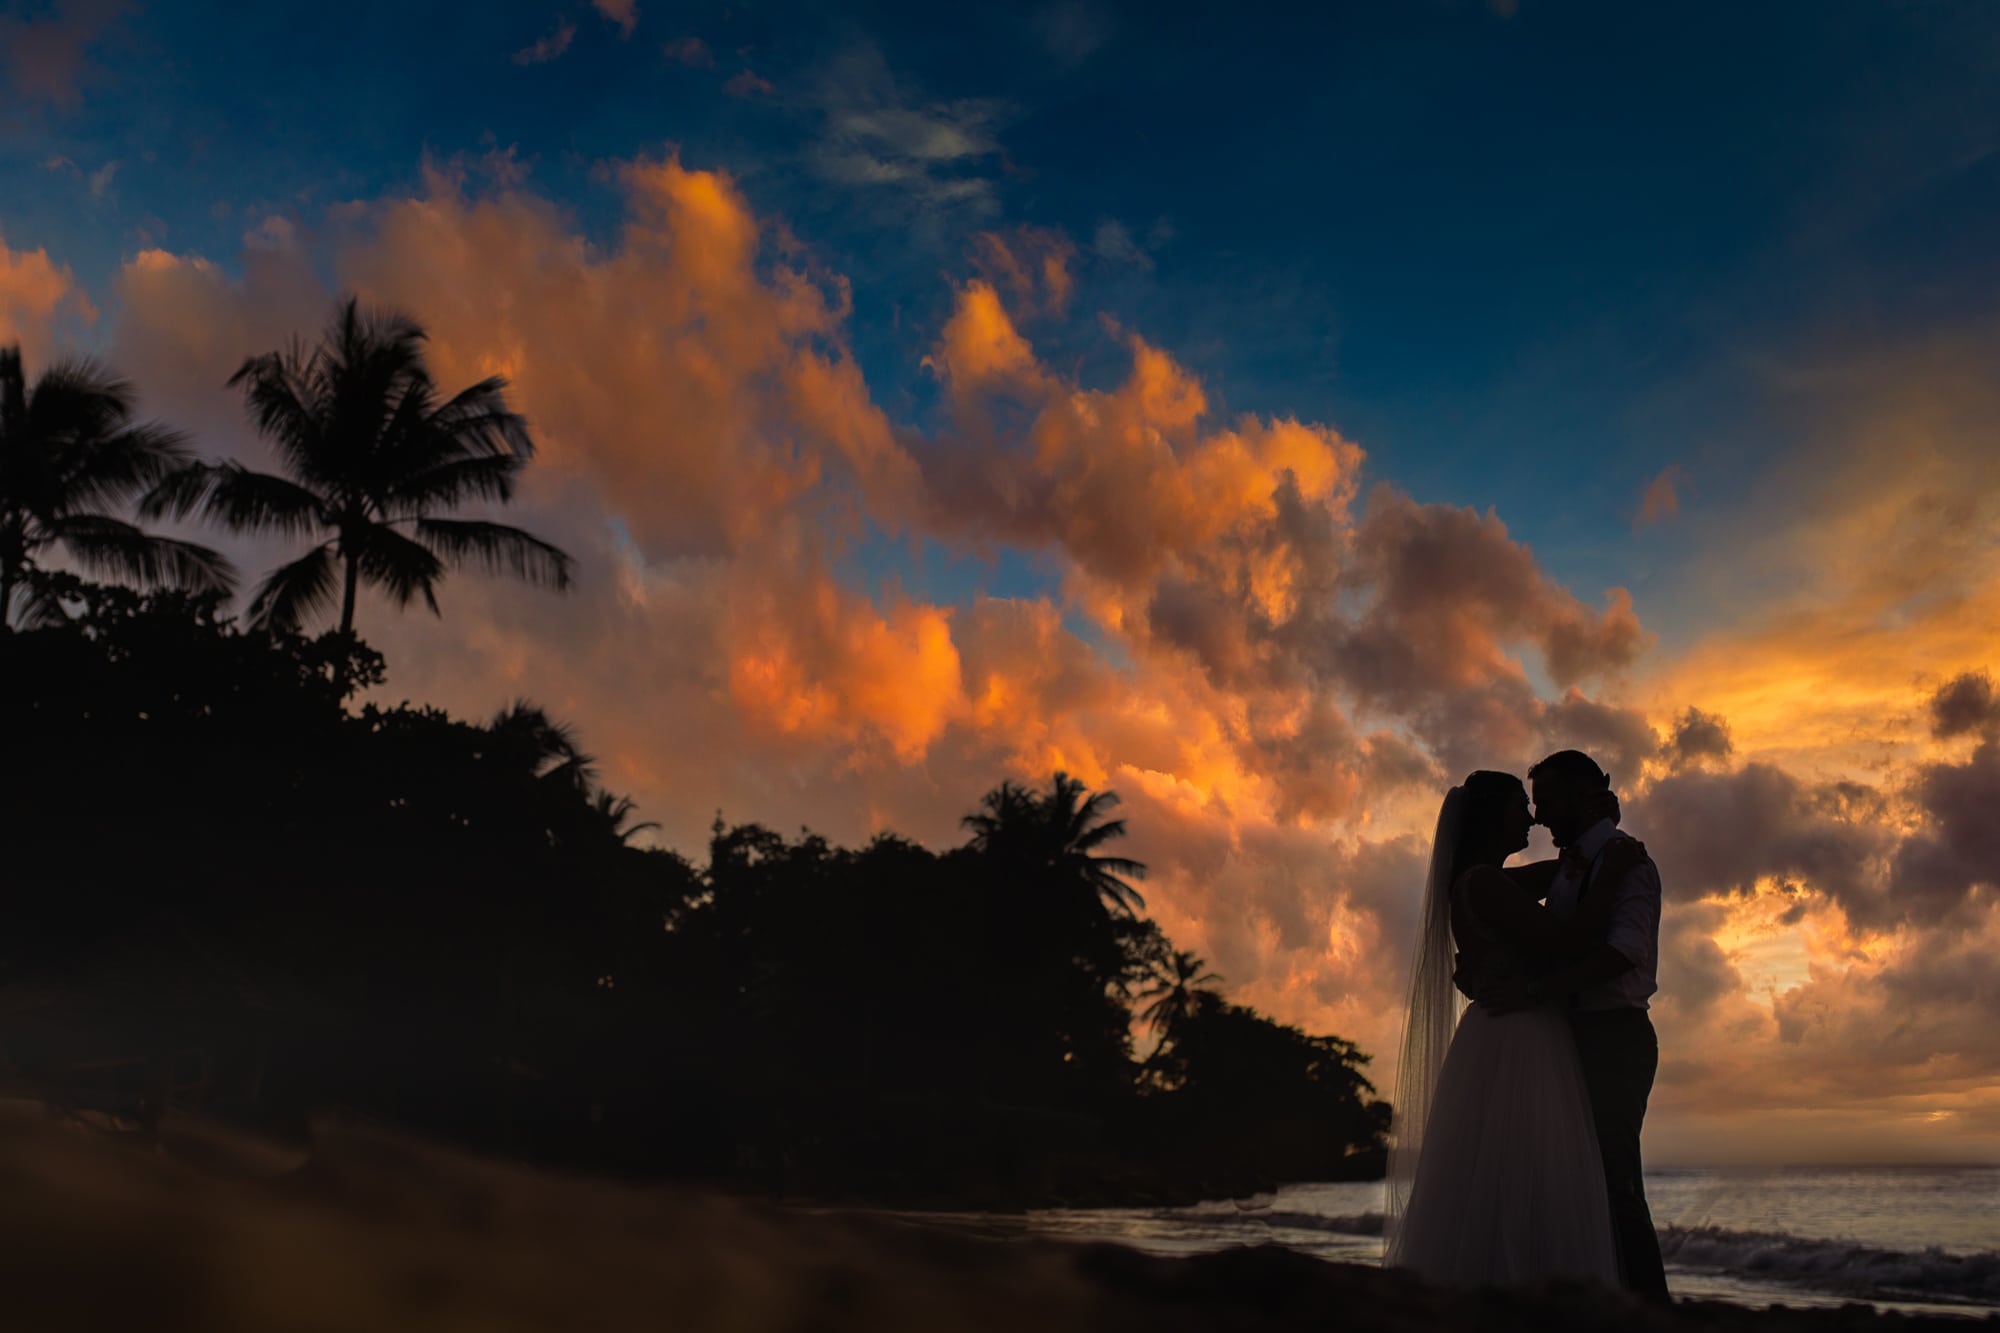 Destination Wedding Photography – Throwback to sunnier days!